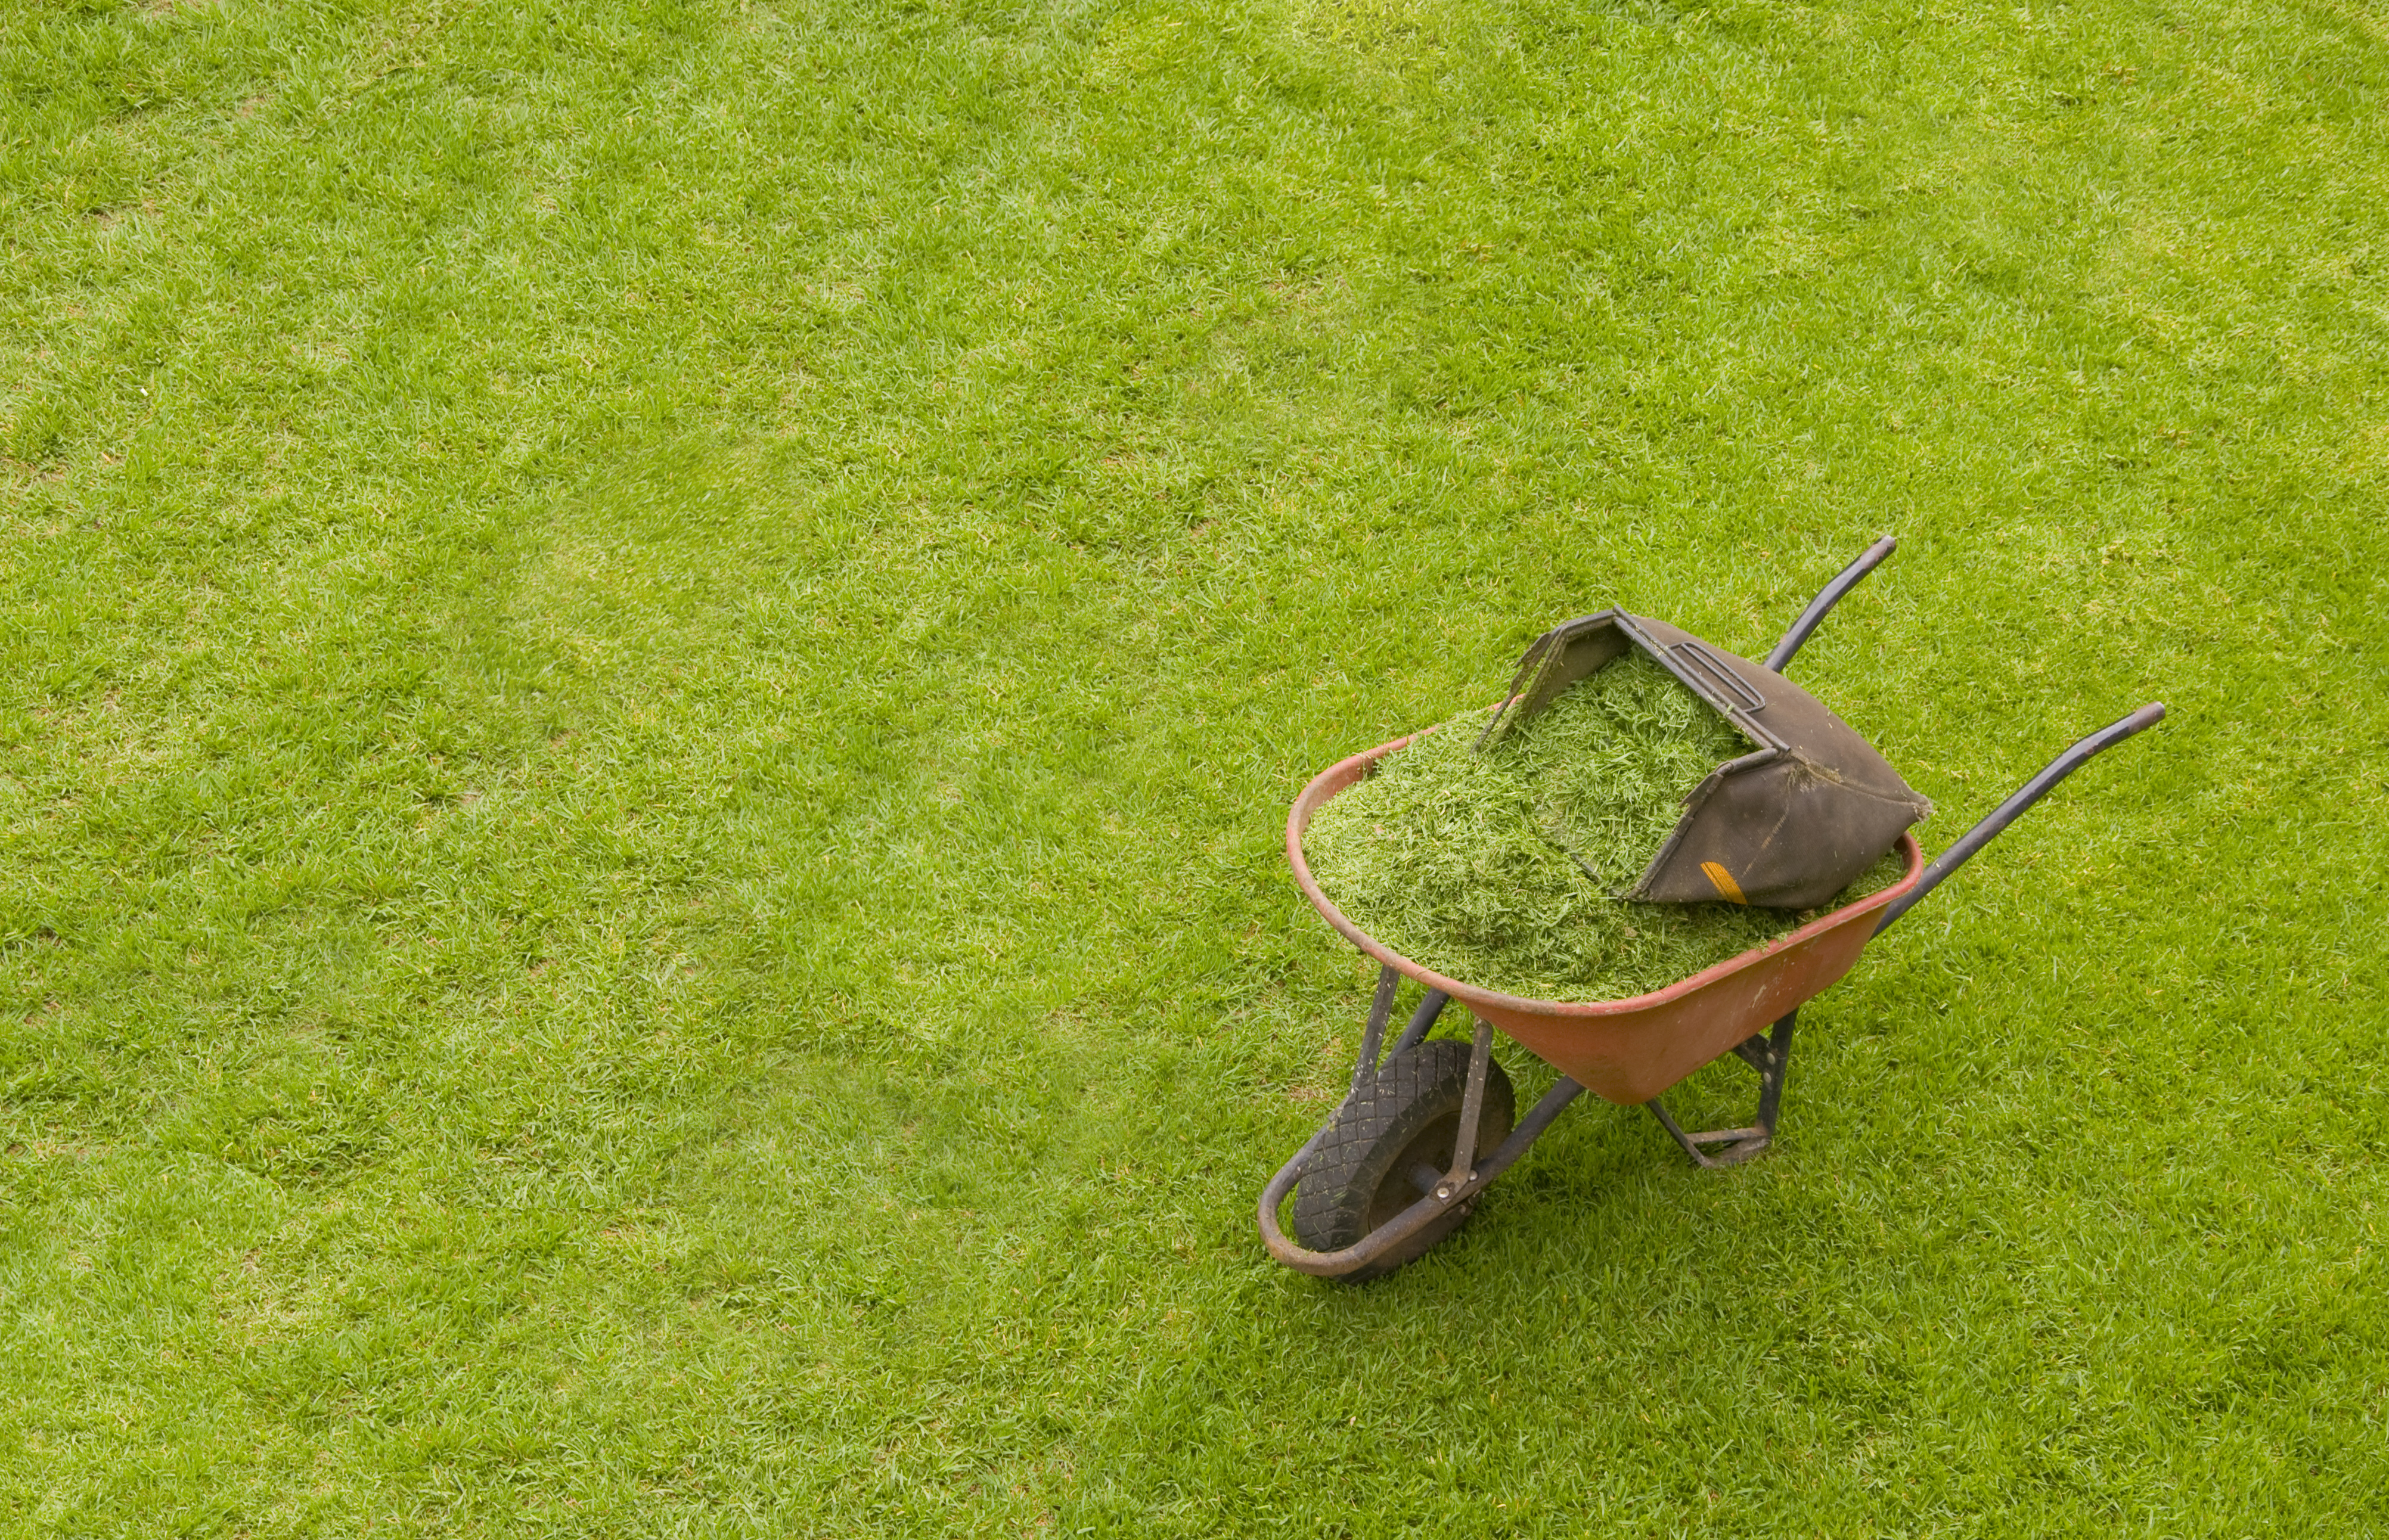 a wheelbarrow full of freshly mowed grass